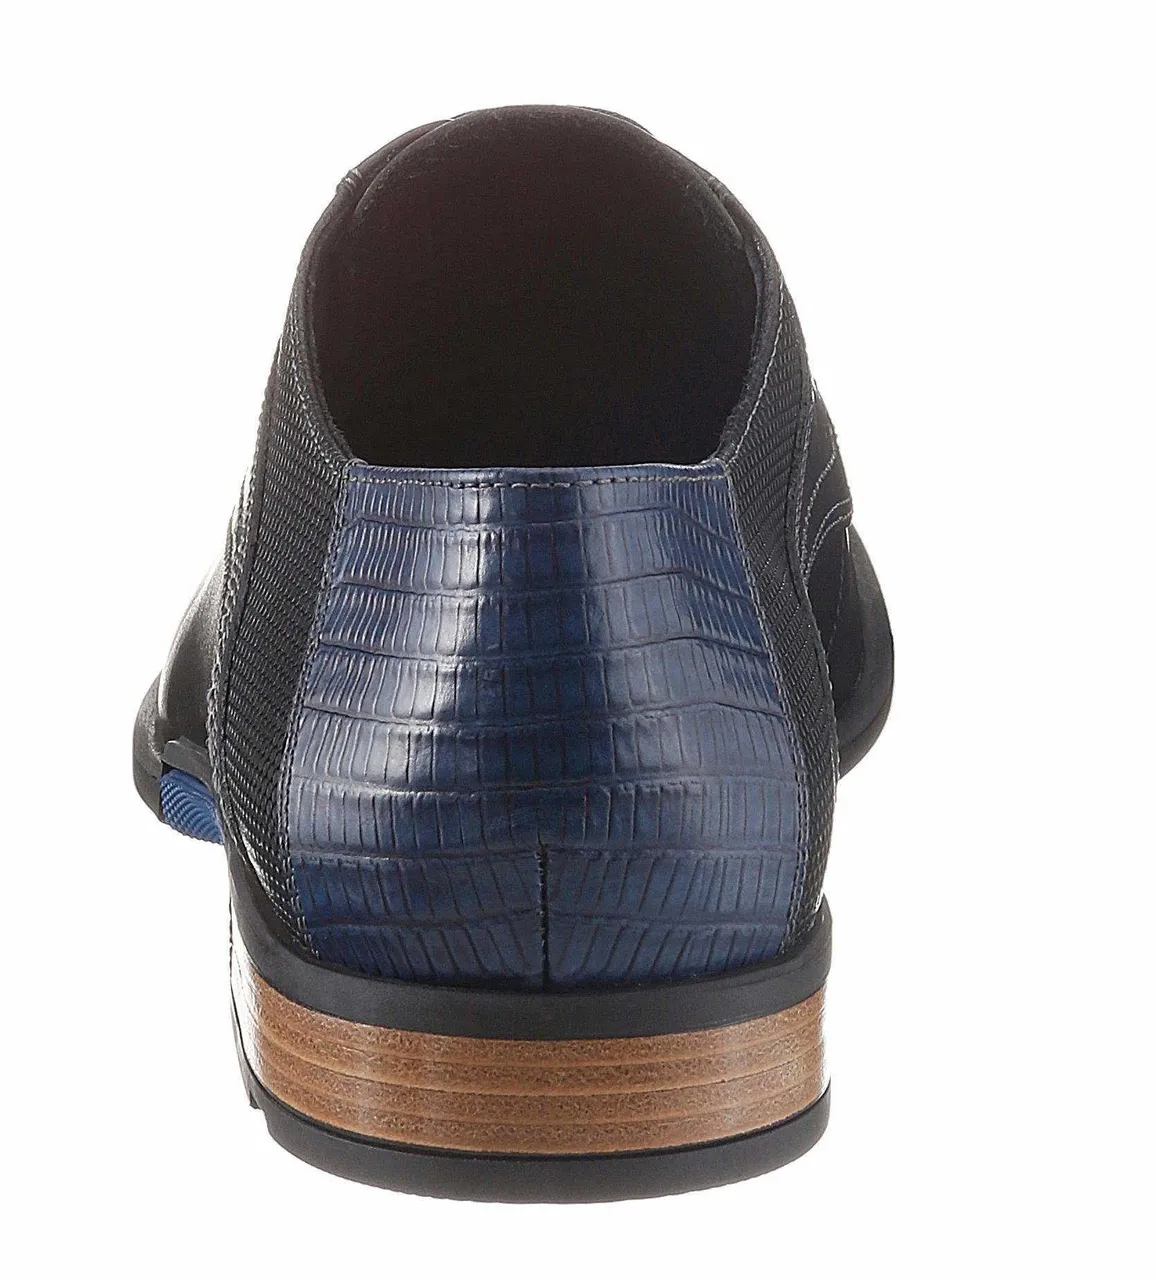 Business Schuhe blau 44,5